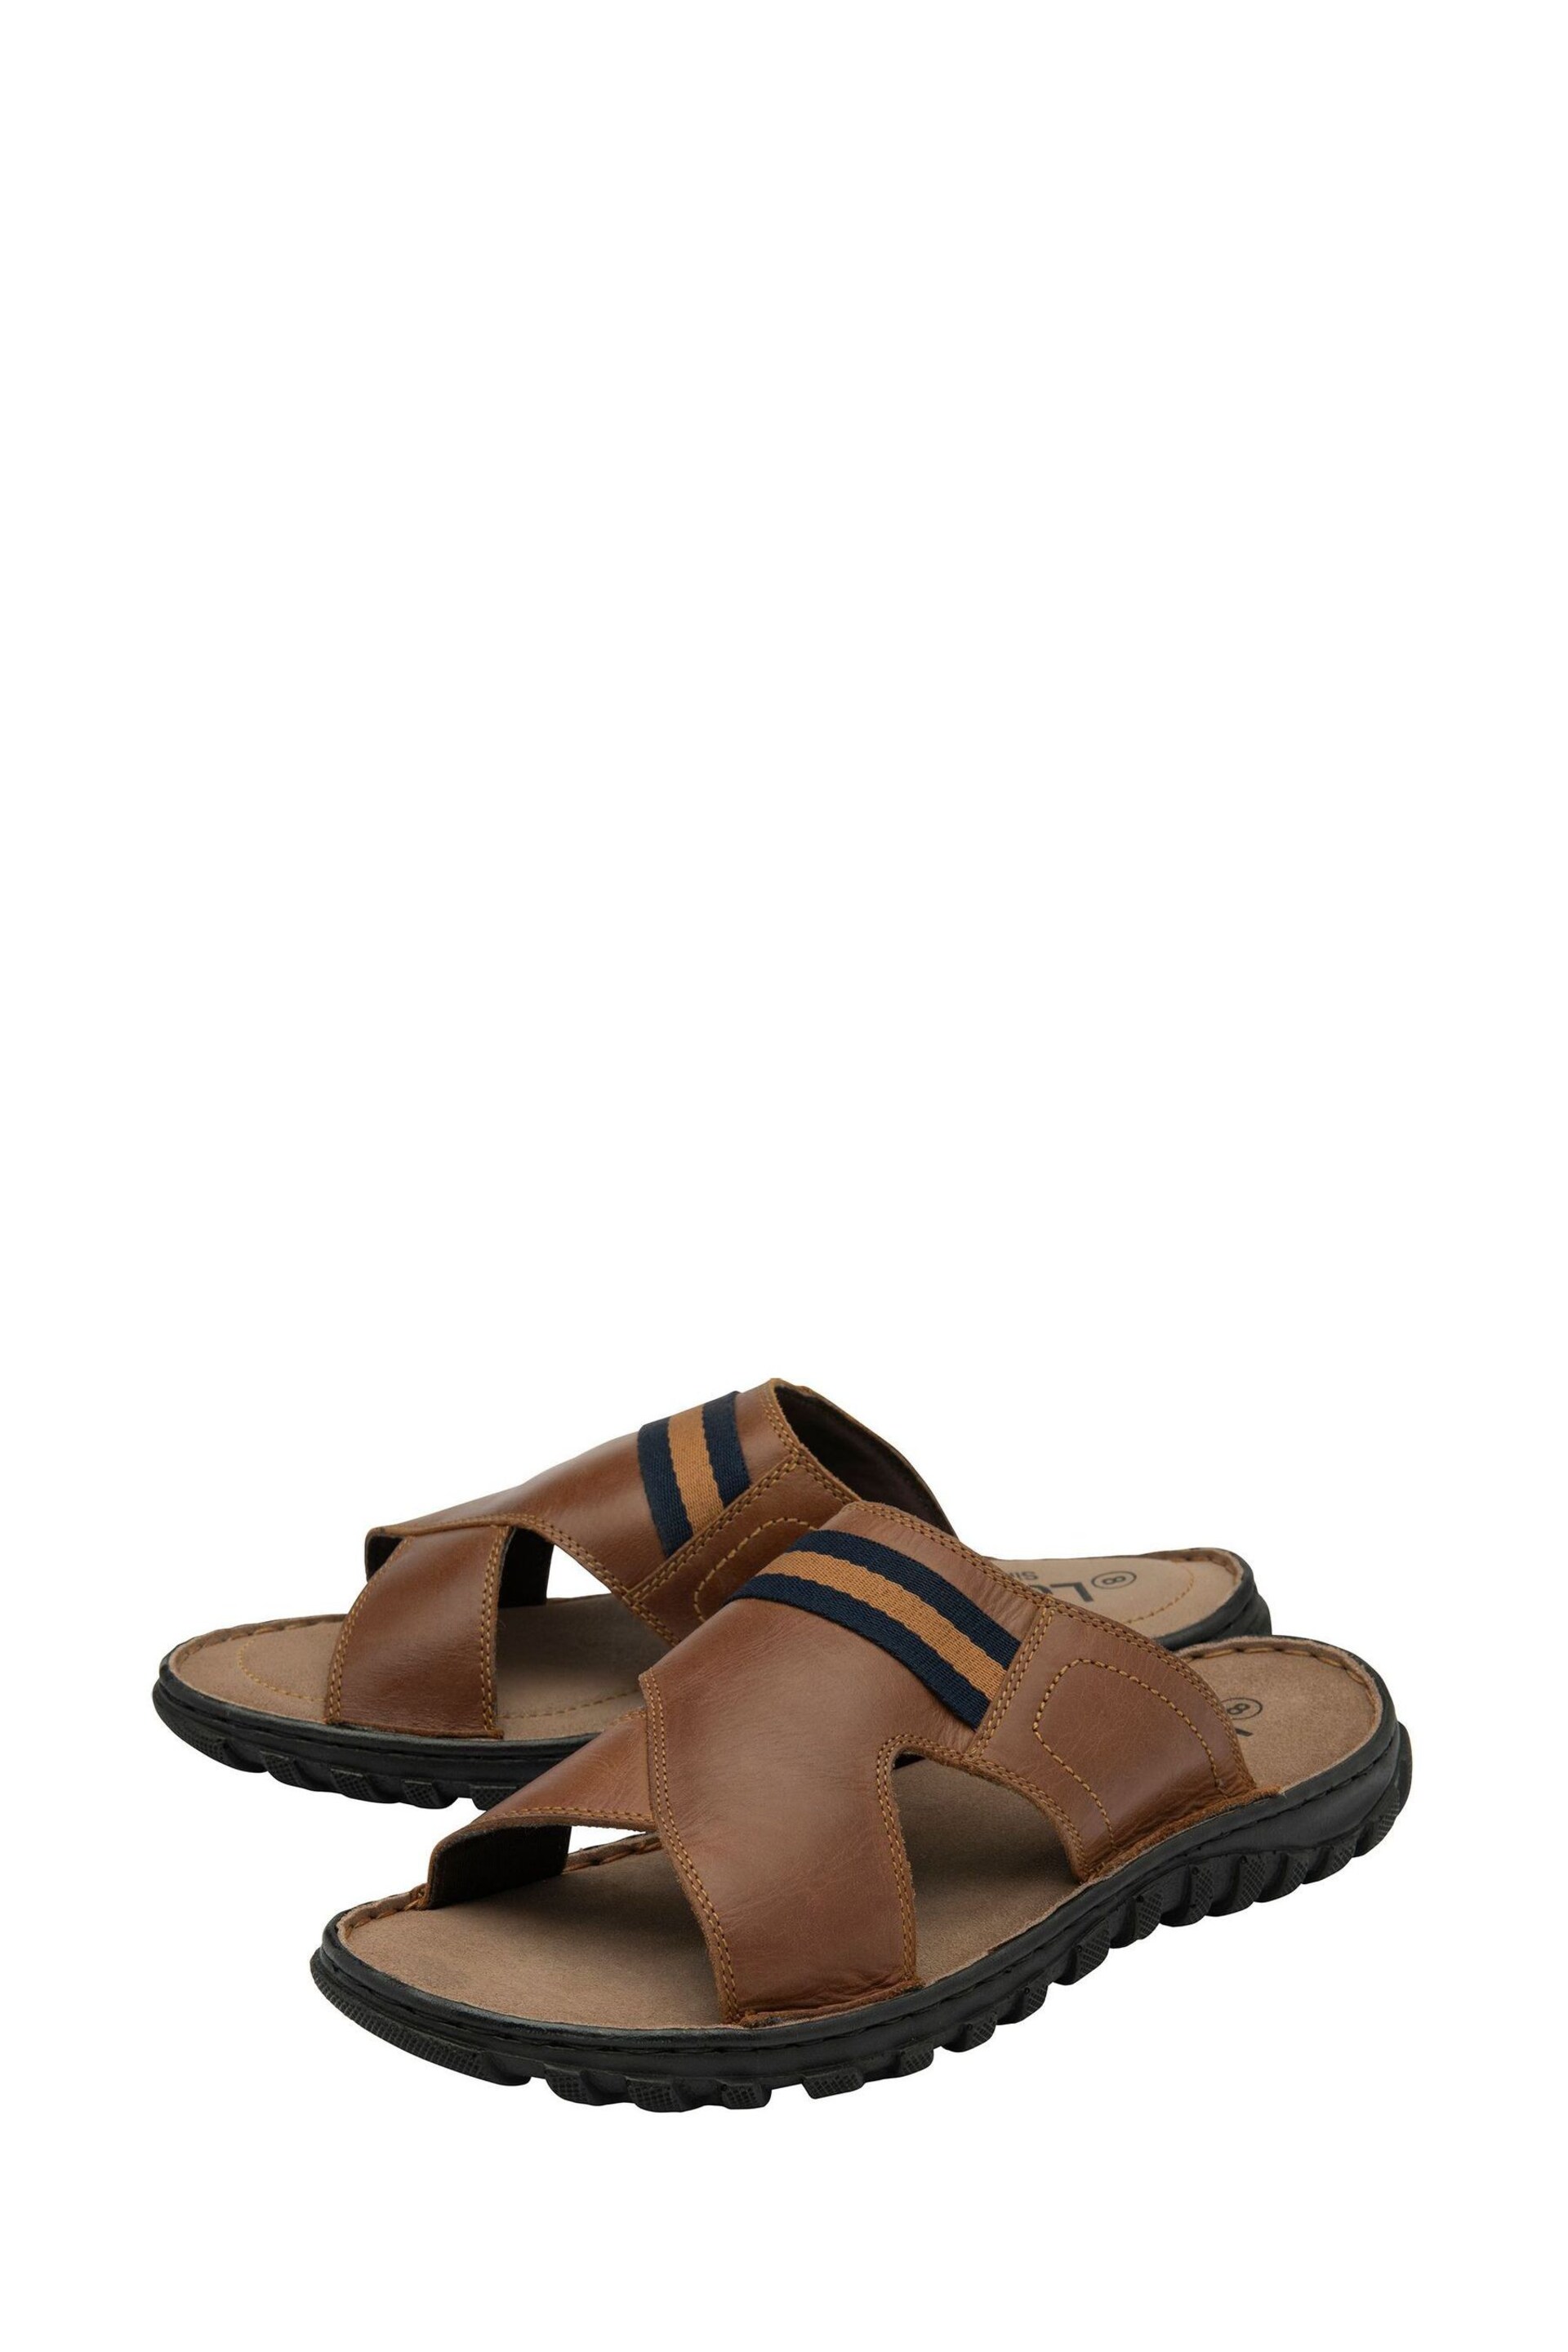 Lotus Brown Leather Mule Sandals - Image 2 of 4